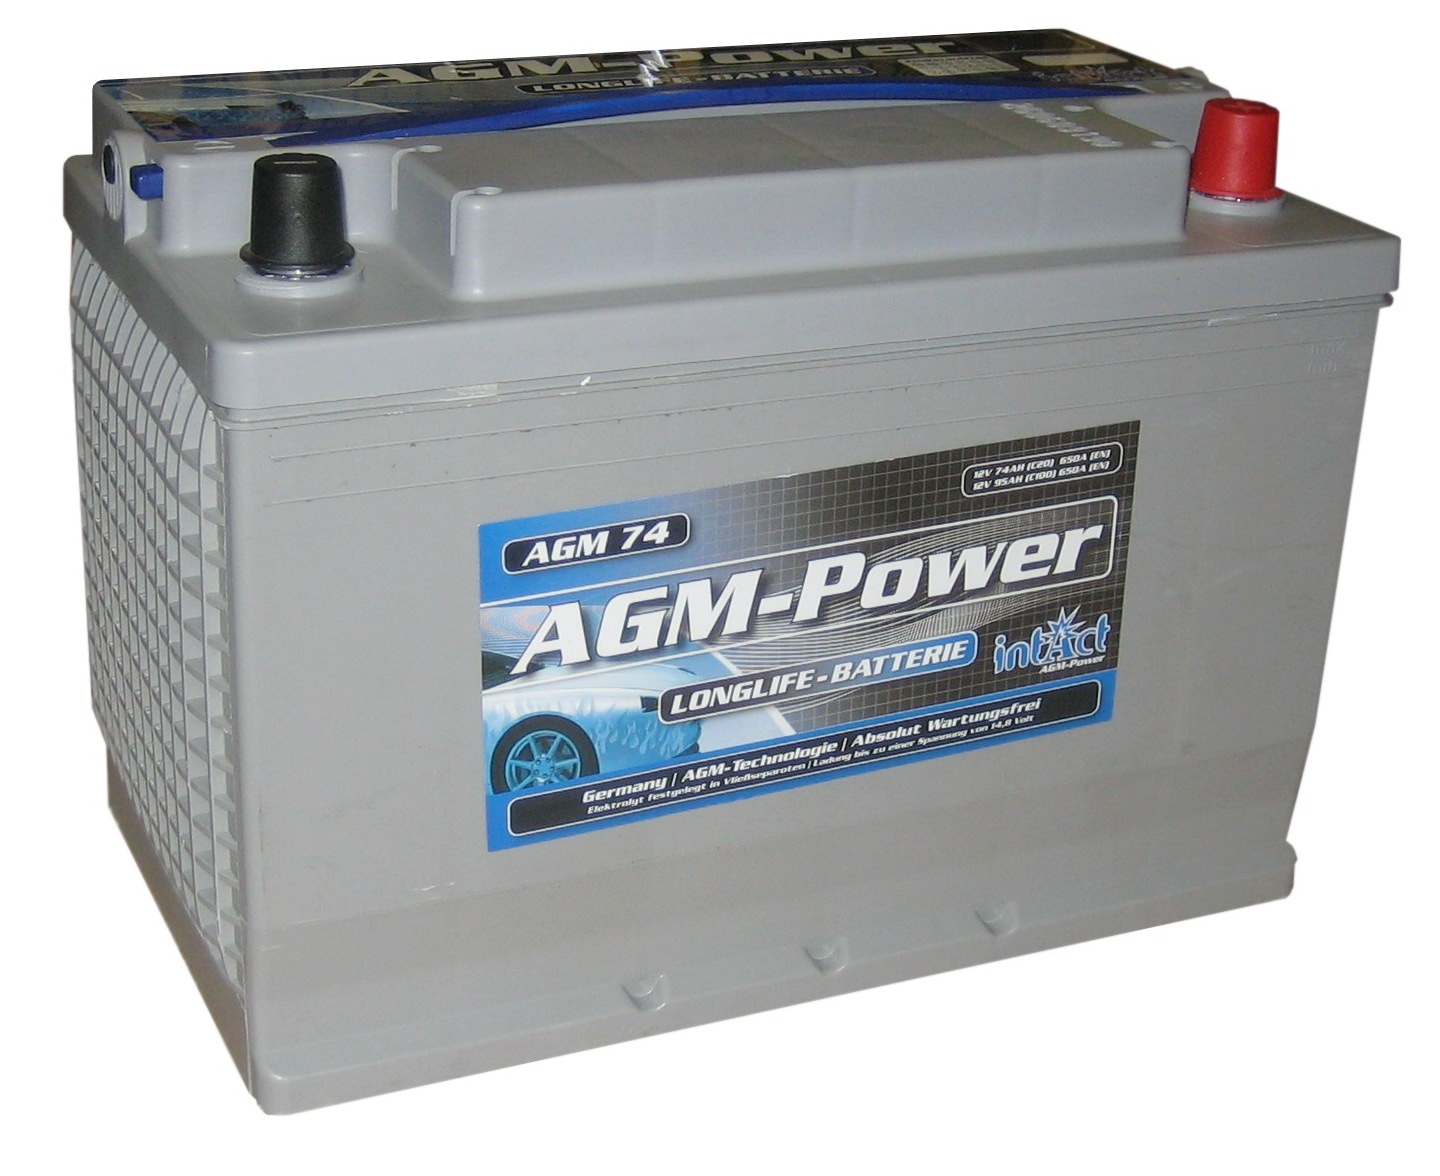 Akumulators Intact AGM-Power 74, 12 V 74 AH c20 85 AH c100, 308x175x210, 0/1